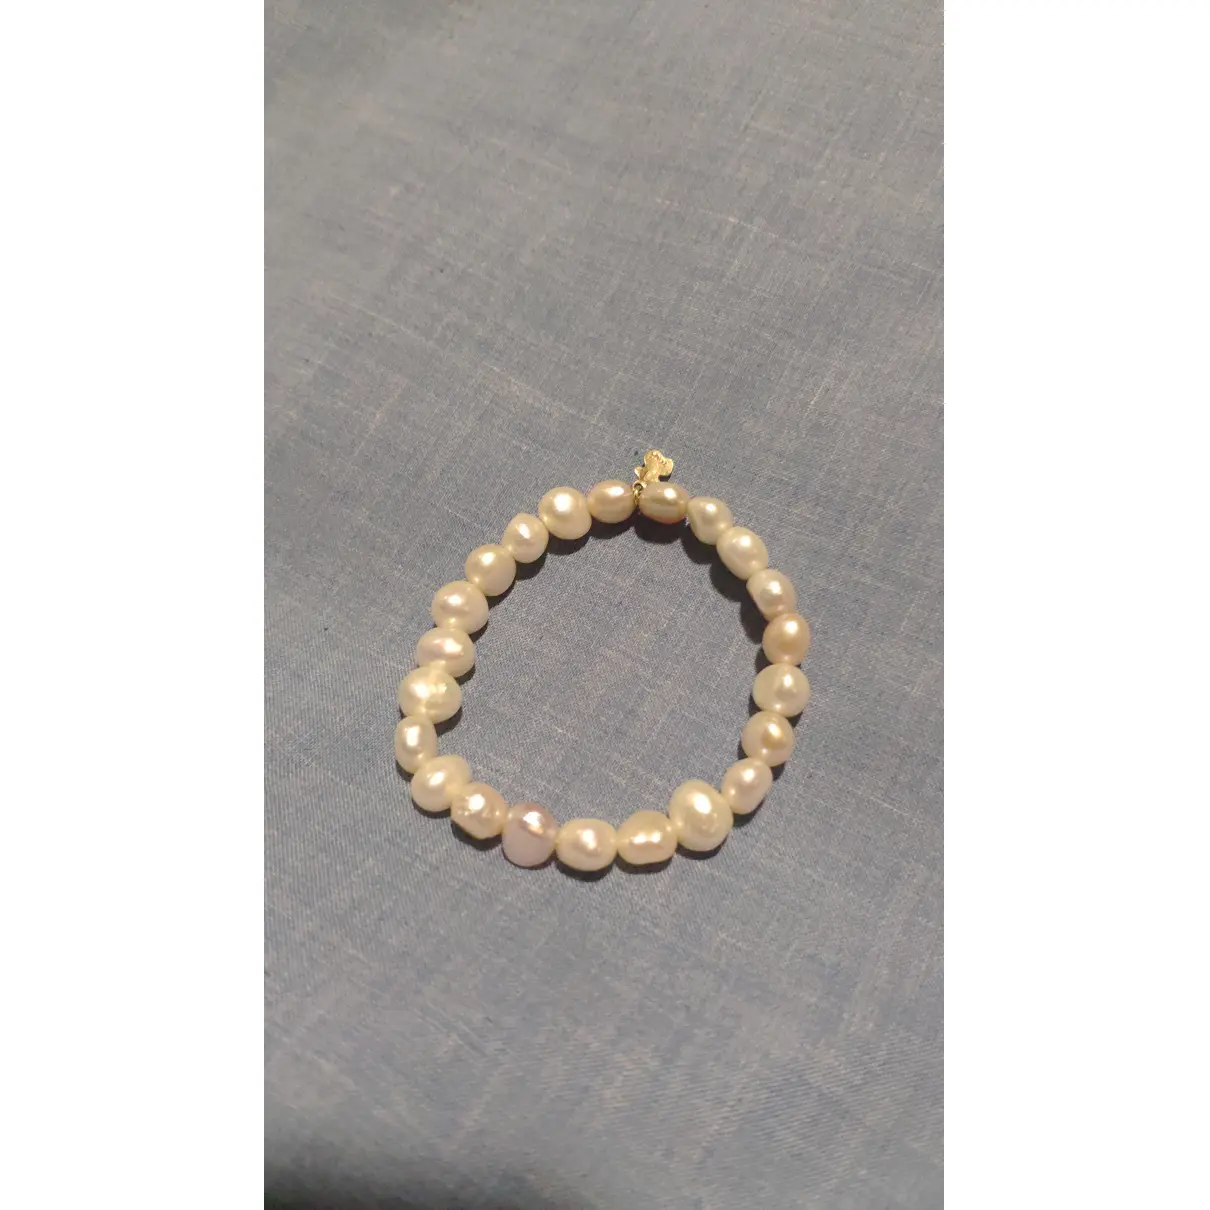 Buy Pulseras Tous Pearls bracelet online